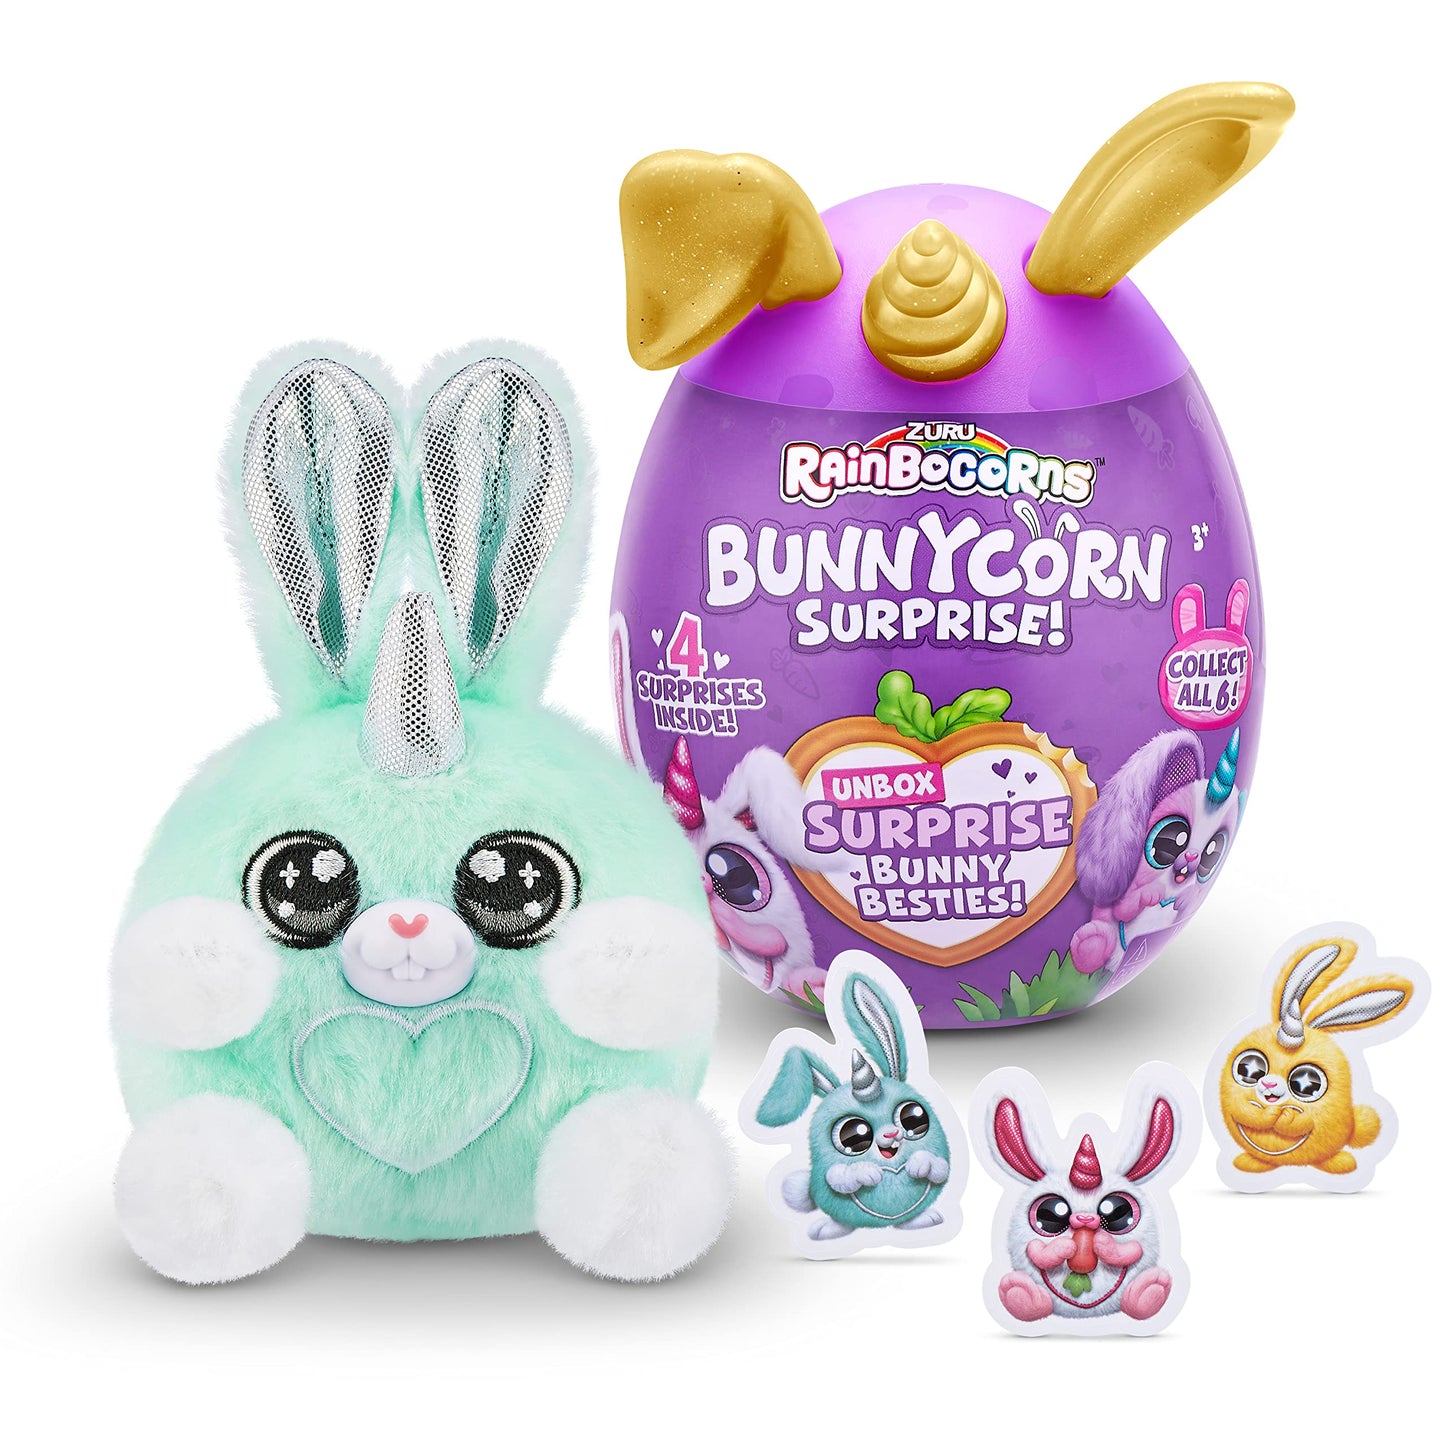 Rainbocorns Bunnycorn Surprise Series 1 Collectible Plush Stuffed Animal by ZURU - Random Color Pick